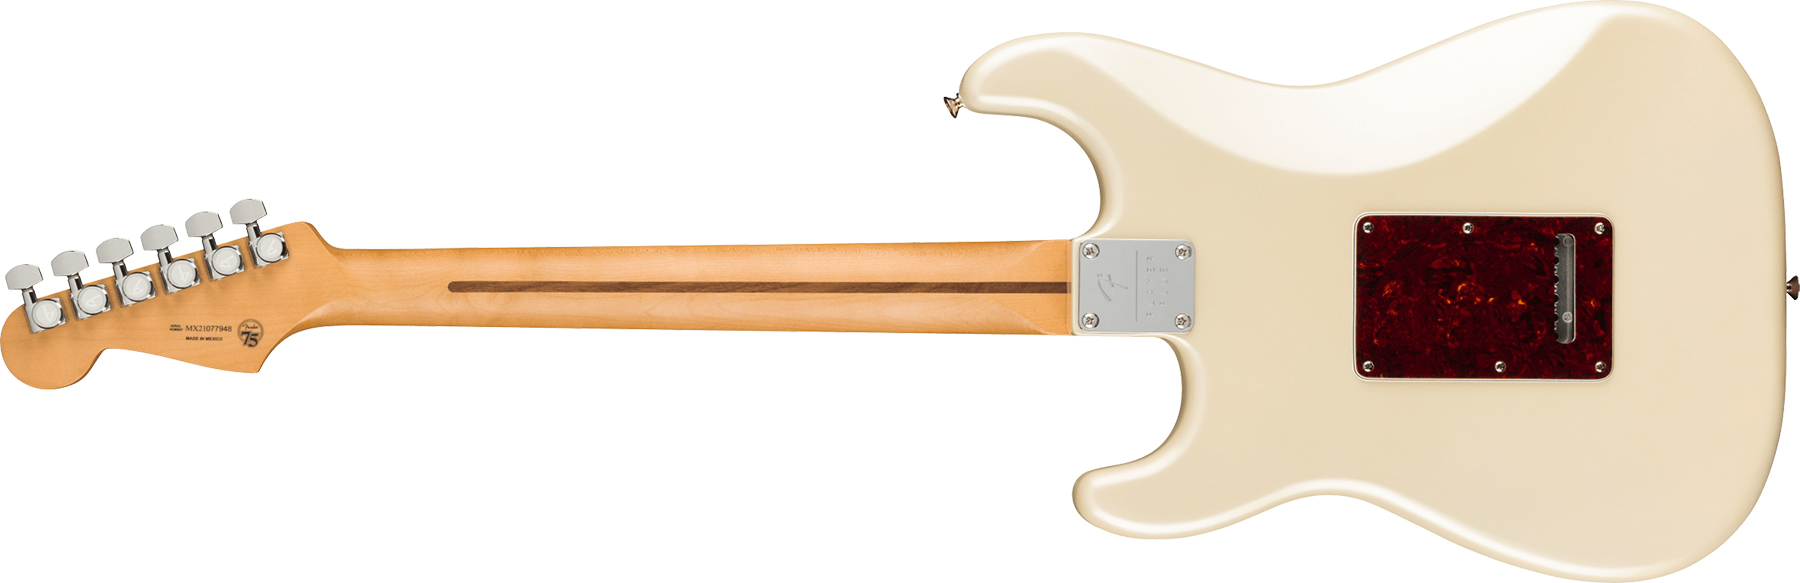 Fender Strat Player Plus Mex 3s Trem Mn - Olympic Pearl - Guitarra eléctrica con forma de str. - Variation 1